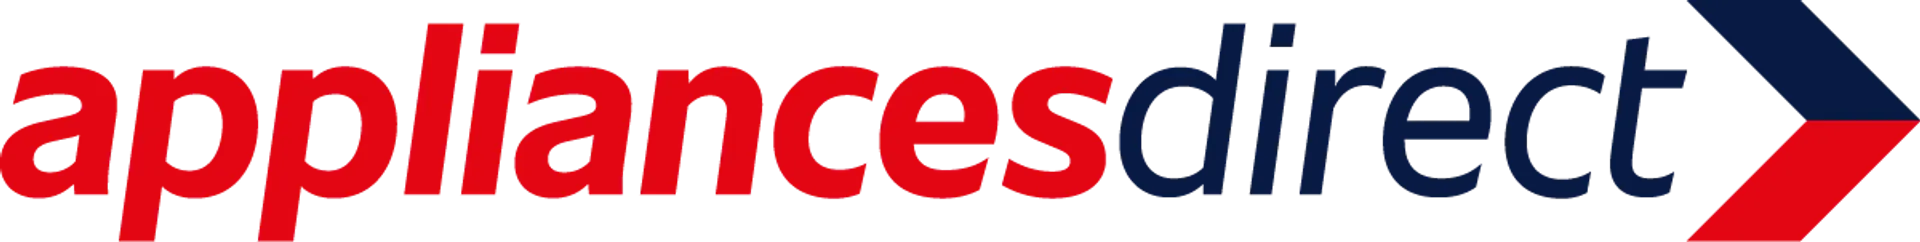 APPLIANCES DIRECT logo